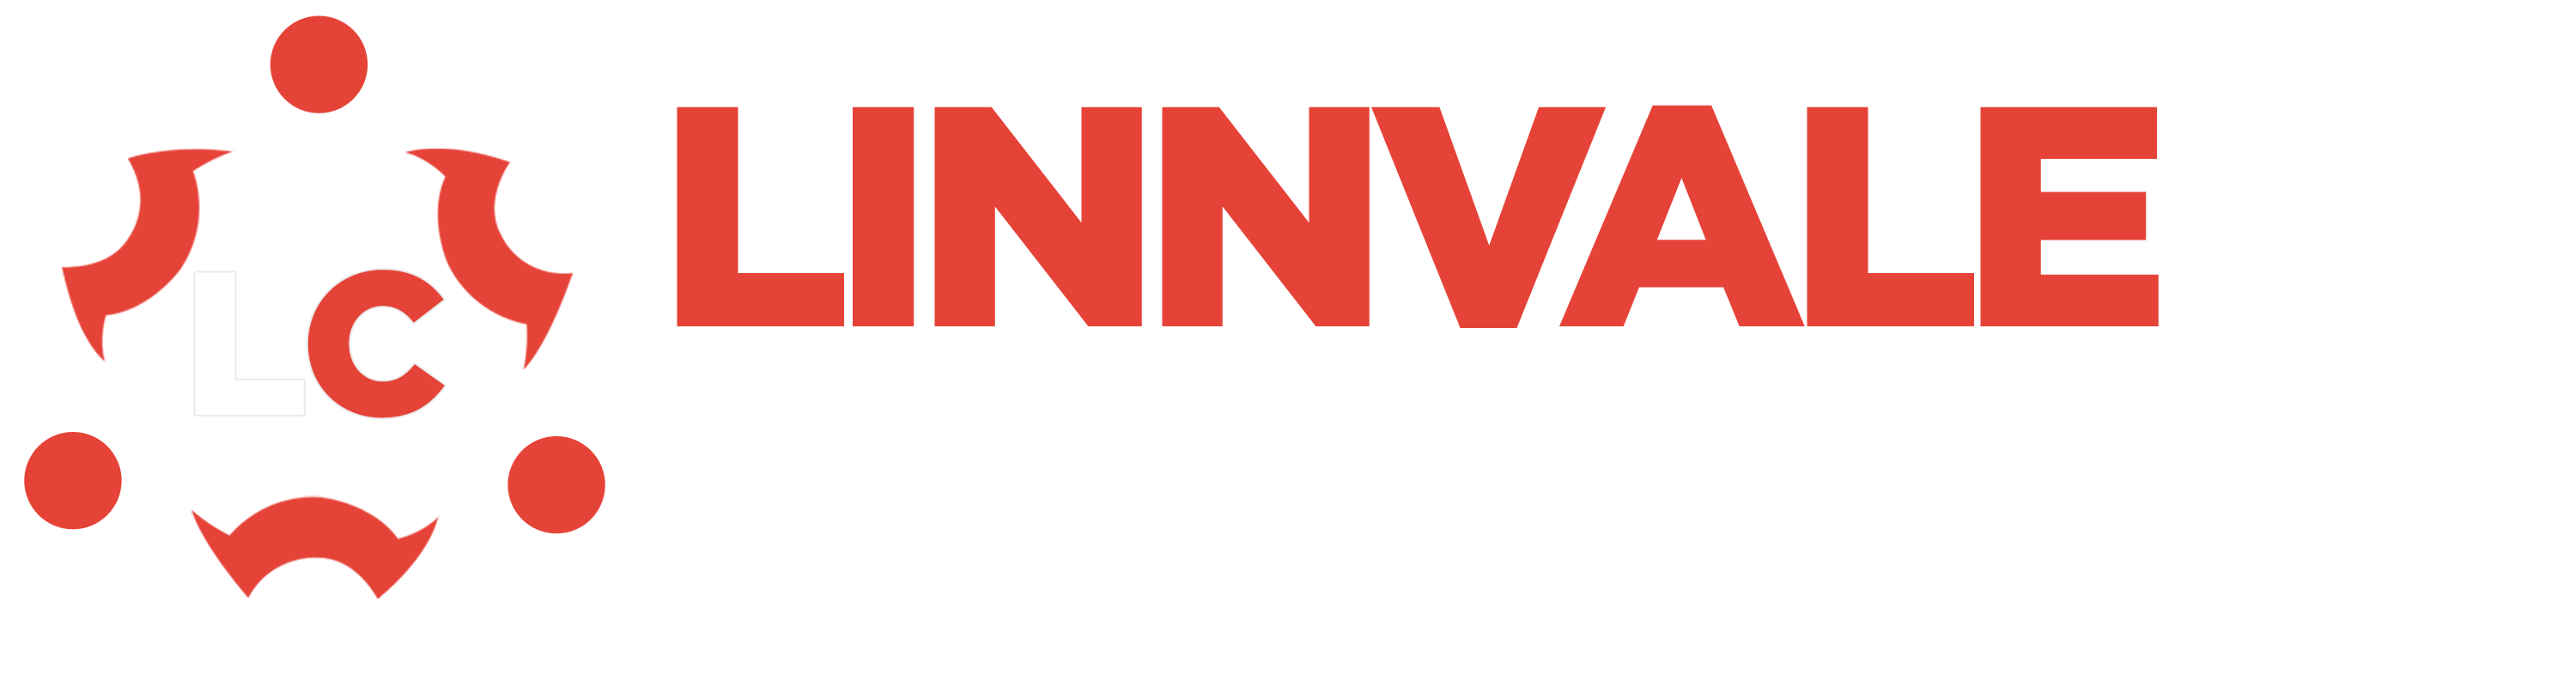 Linnvale Community